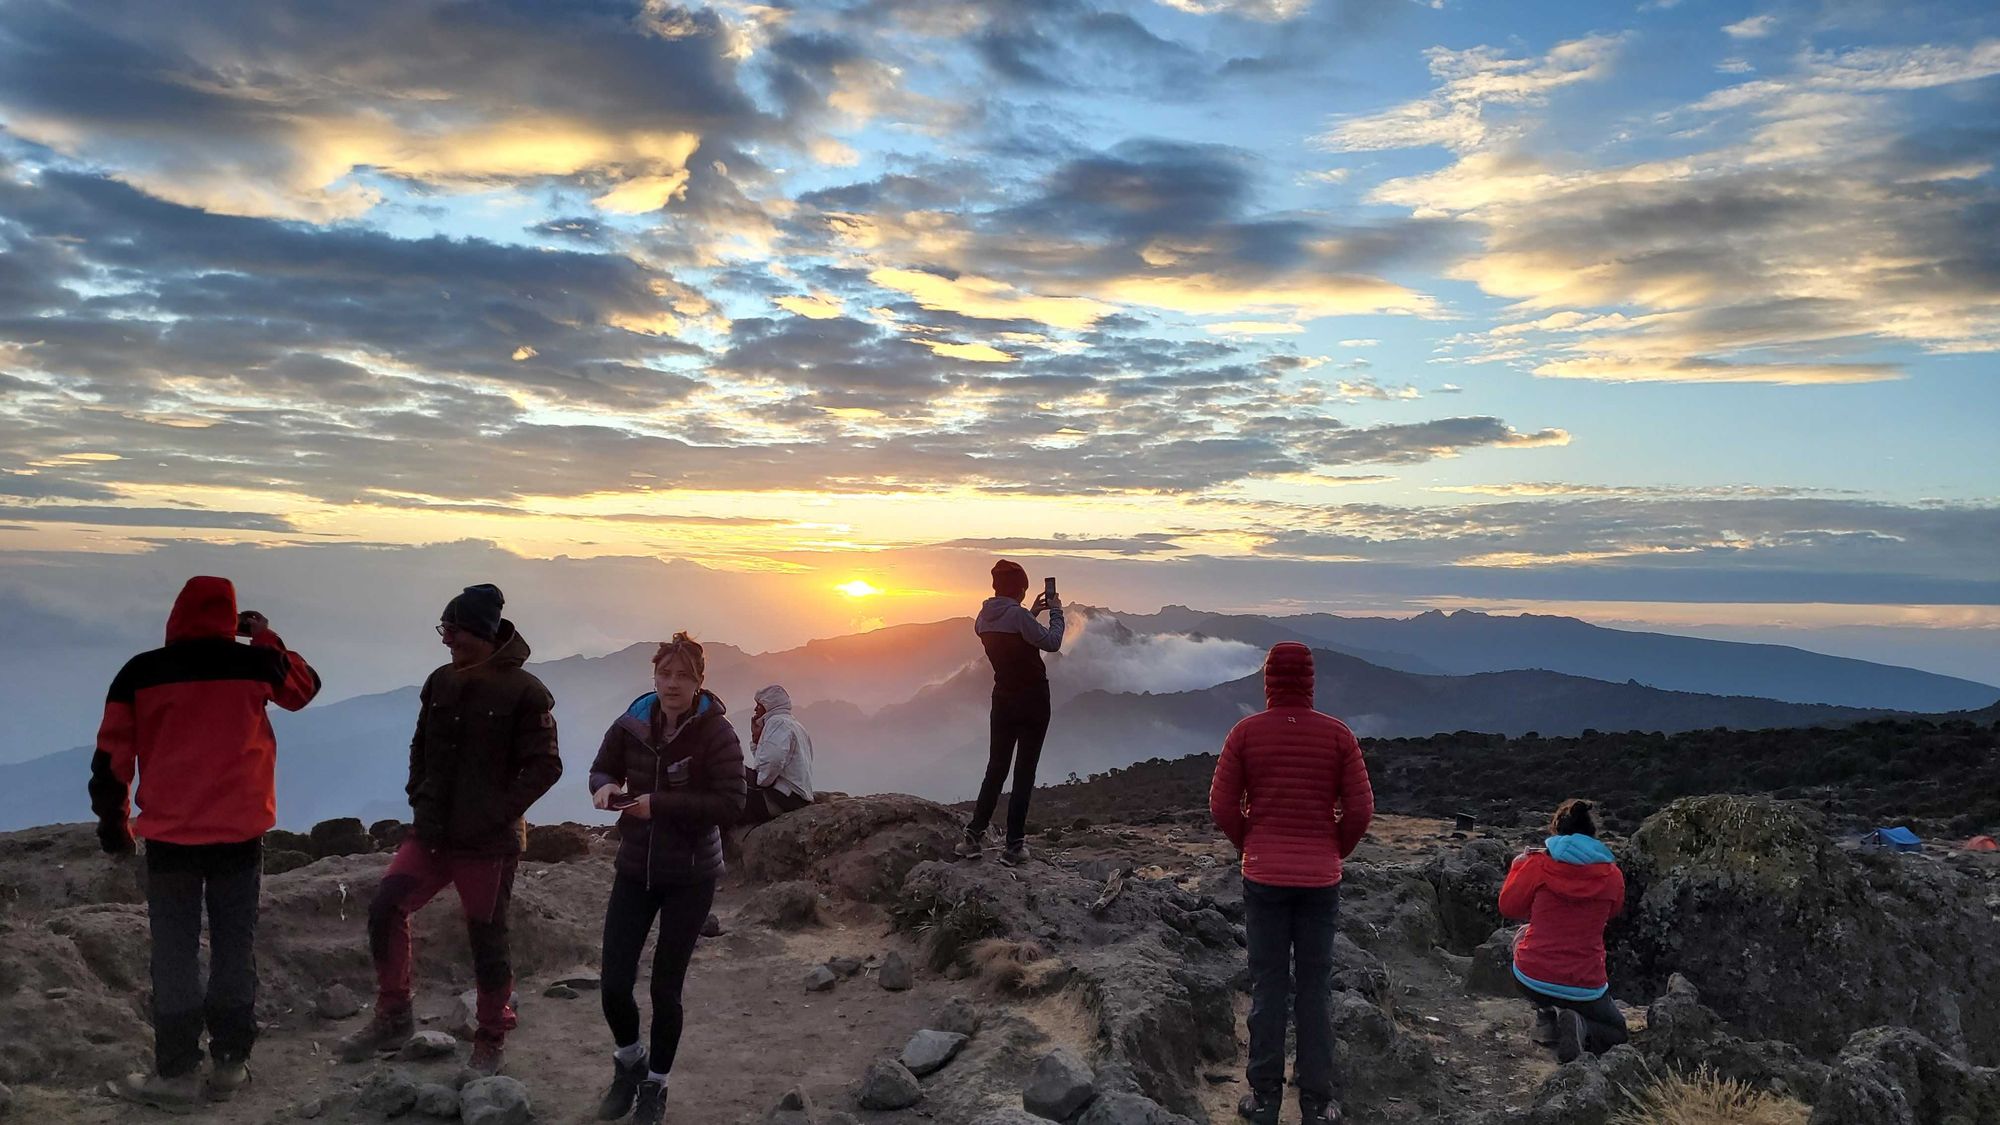 Trekkers viewing the sunset from Shira Camp on Kilimanjaro, Tanzania.